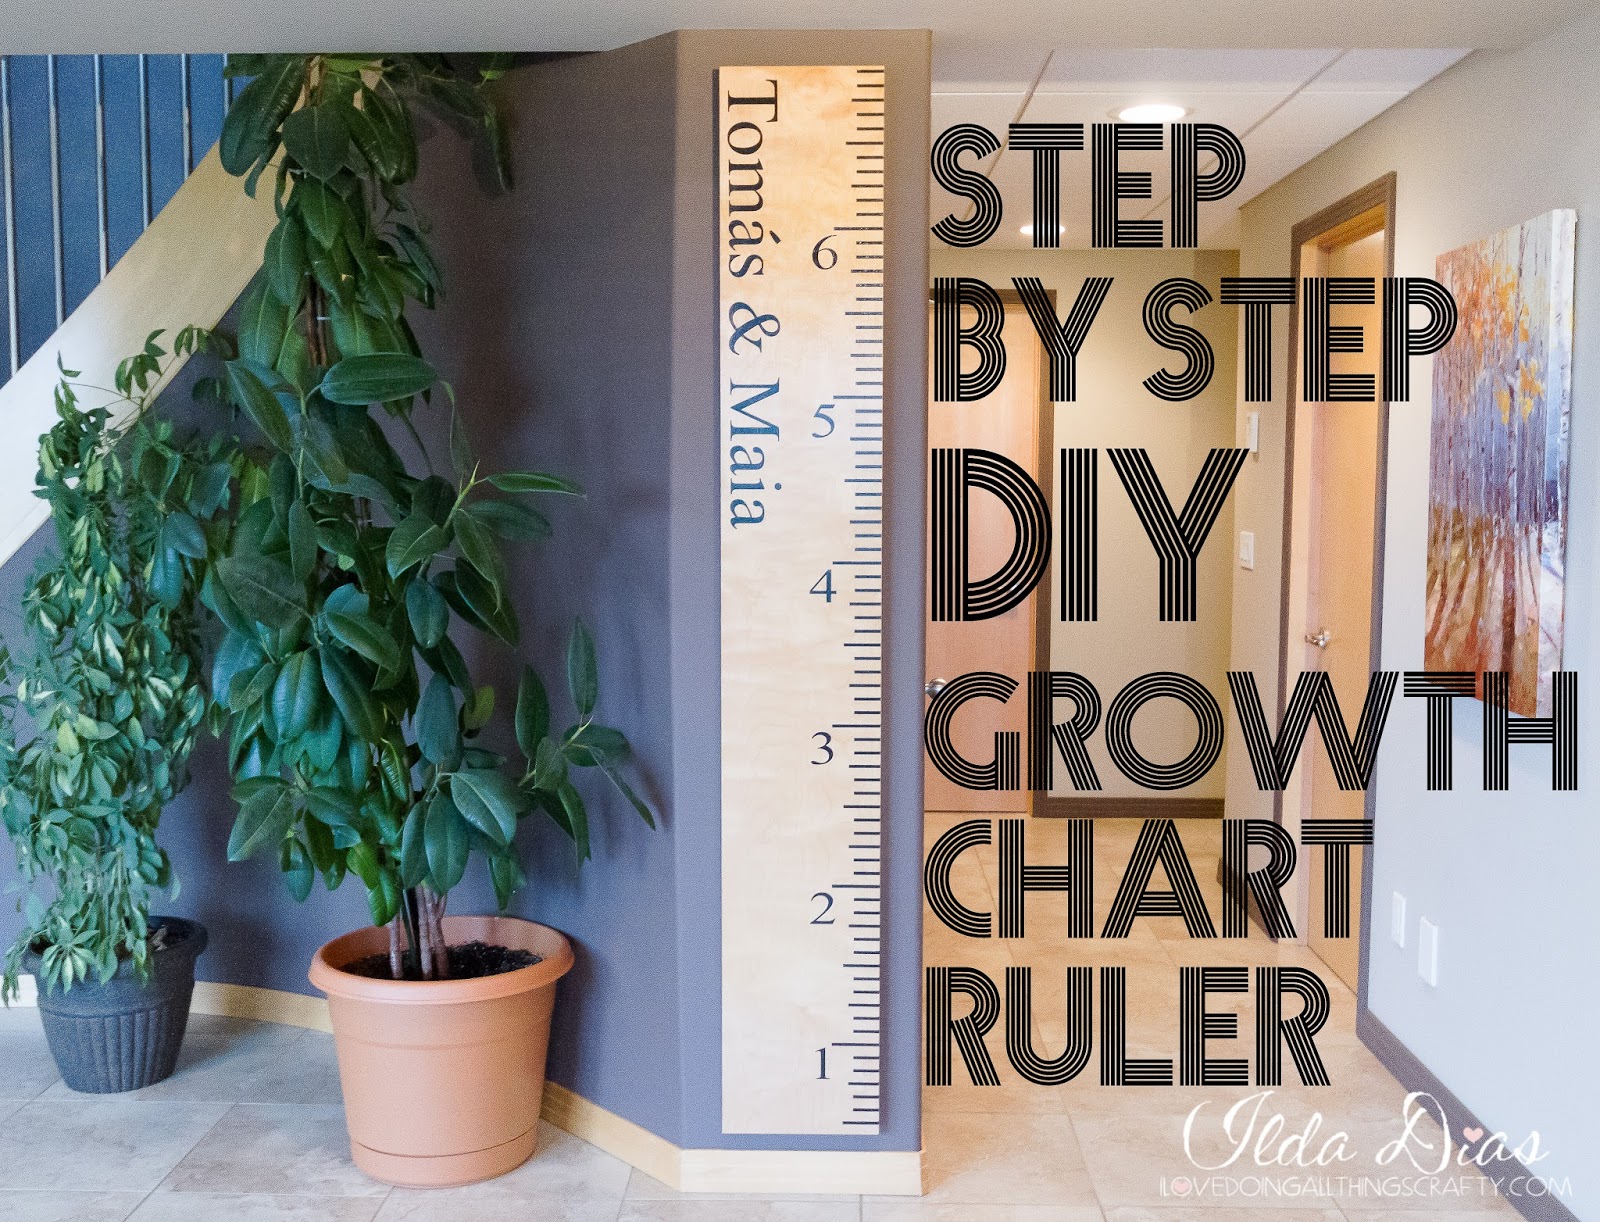 Diy Growth Chart Ruler Cricut